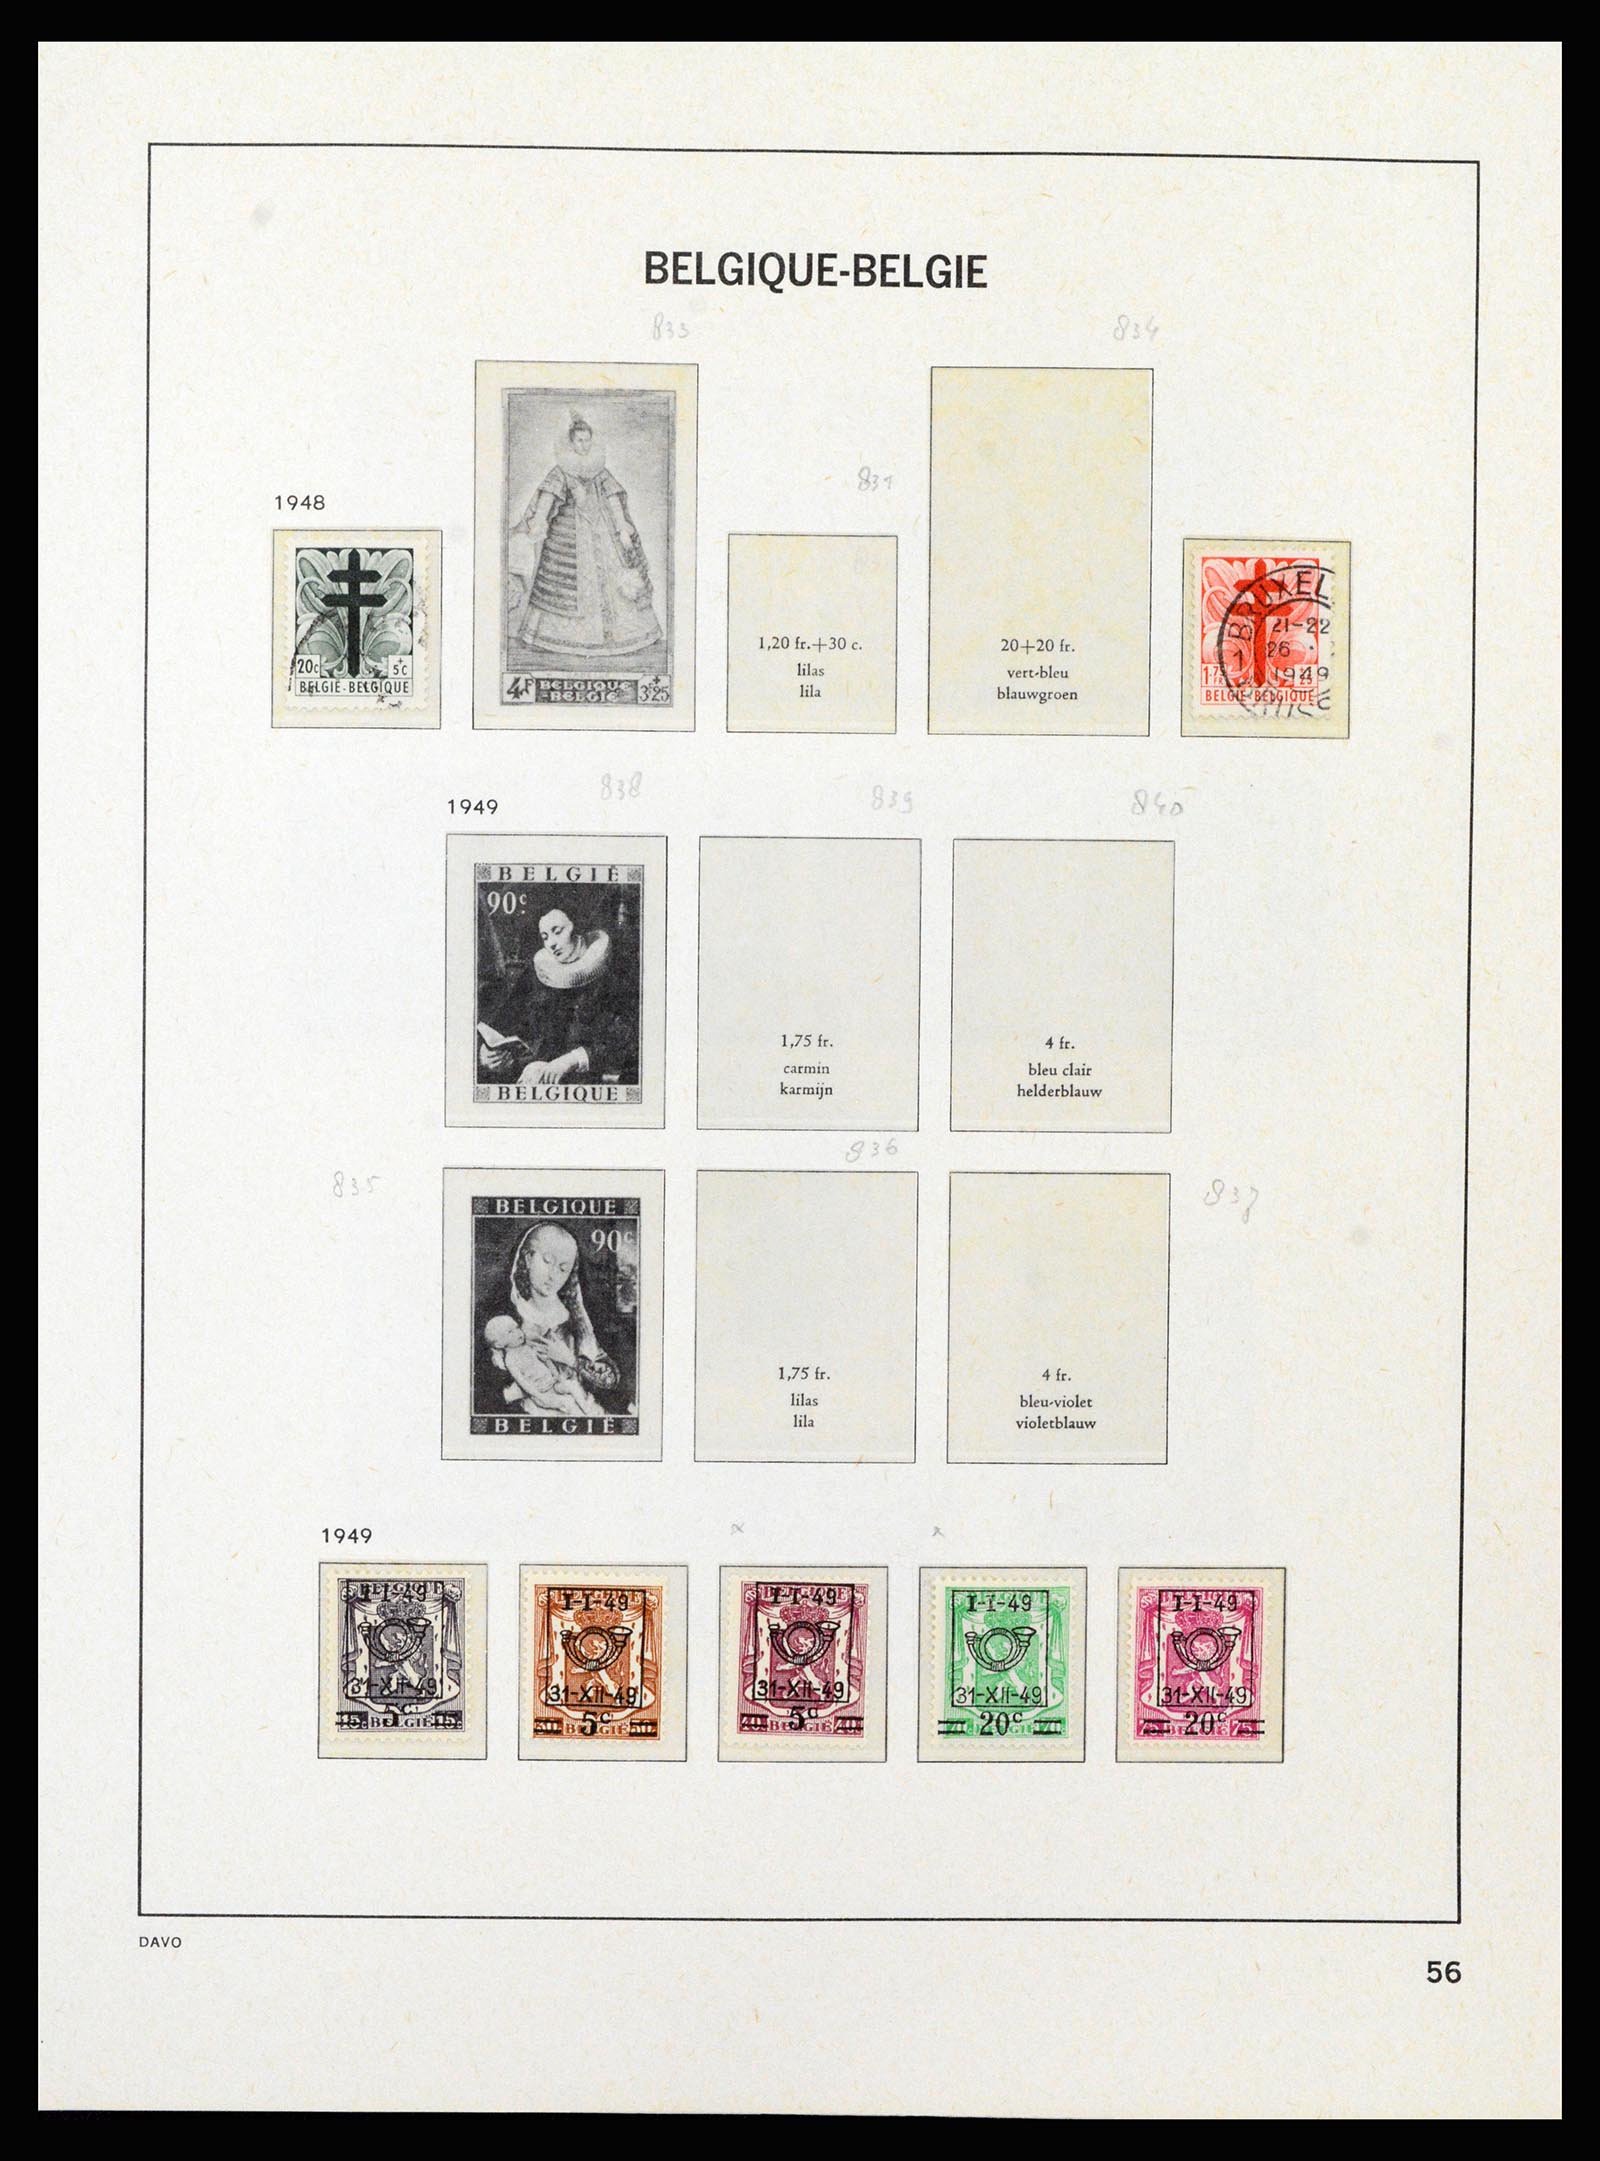 37189 058 - Stamp collection 37189 Belgium 1849-2006.